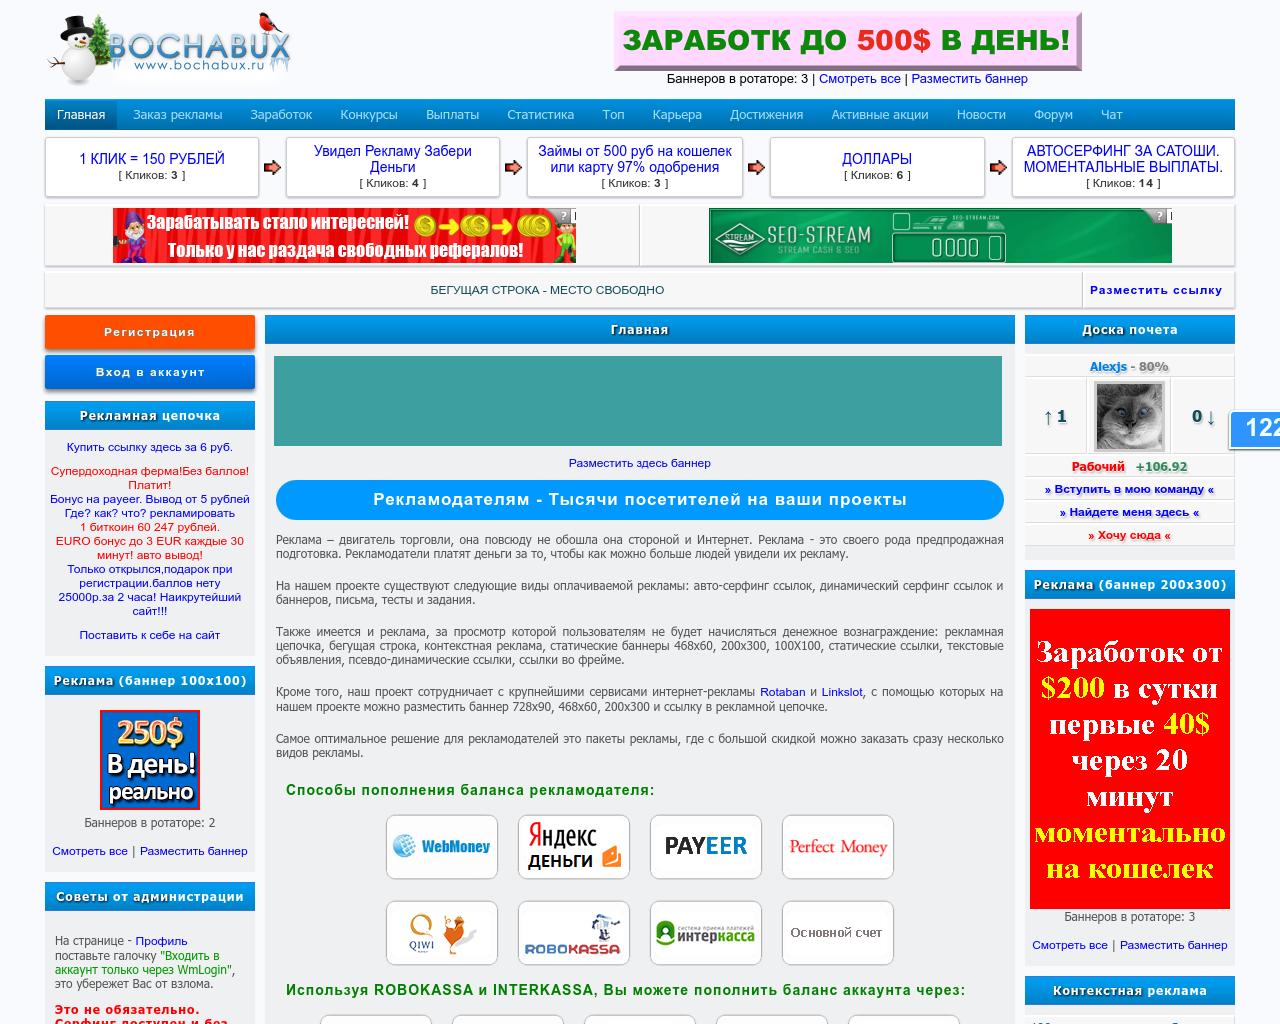 Изображение сайта bochabux.ru в разрешении 1280x1024